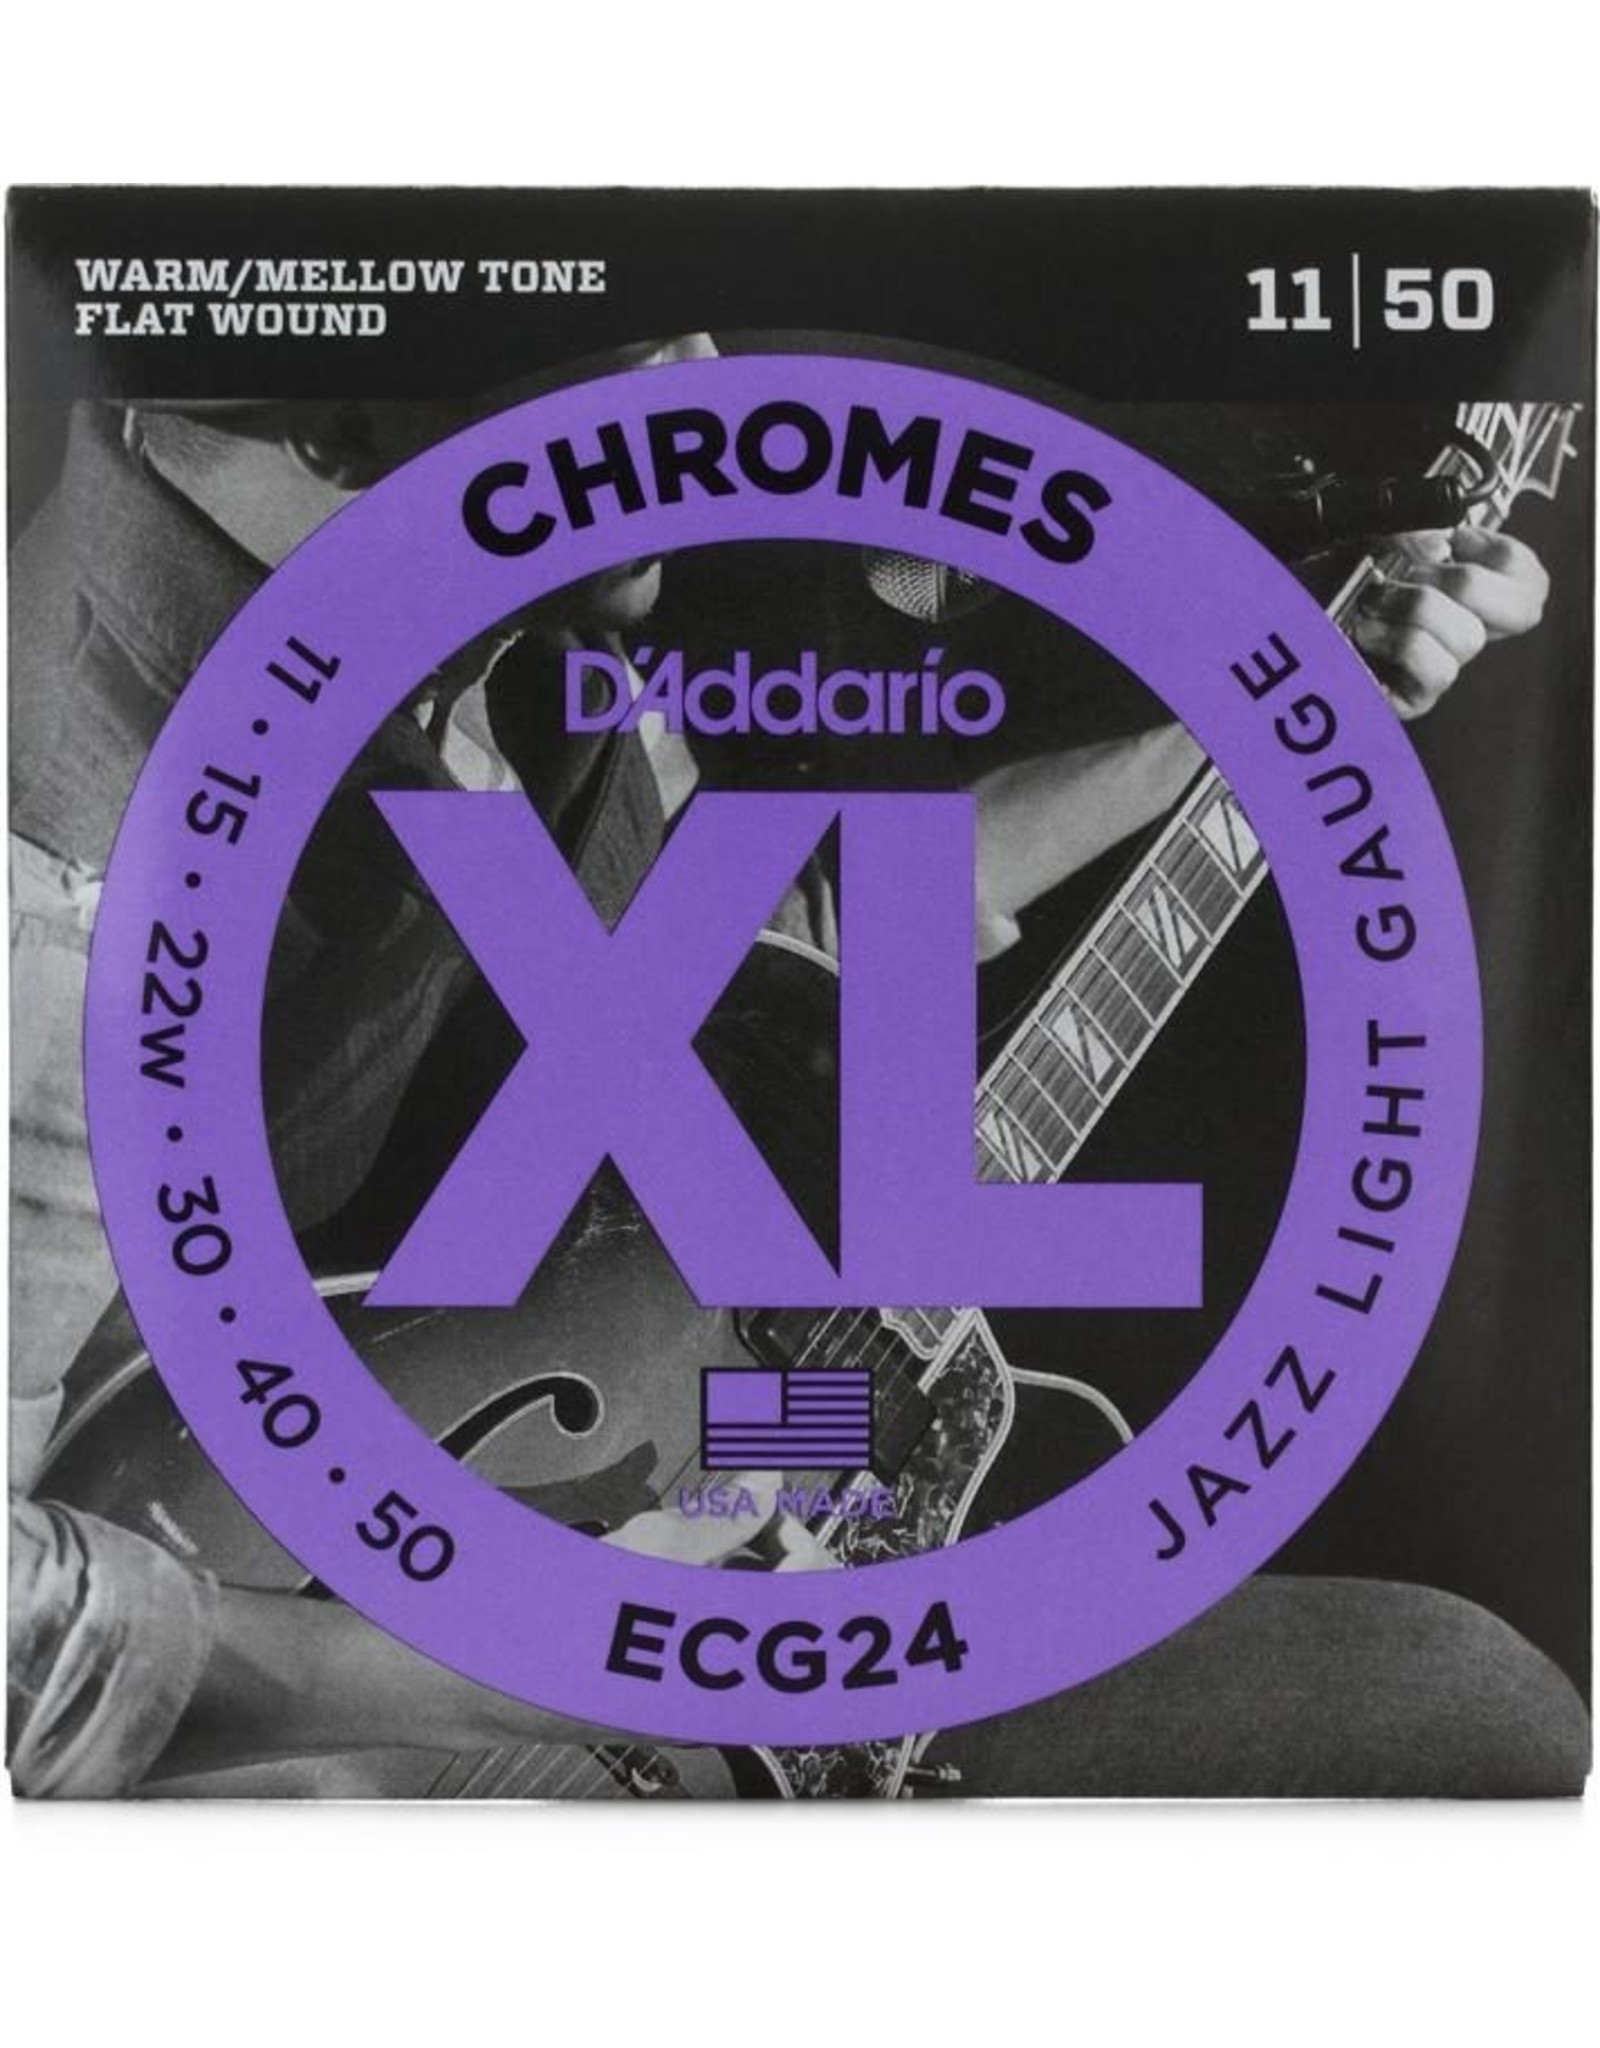 D'Addario D'Addario ECG24 Jazz Light Chromes Electric Guitar strings 11-50